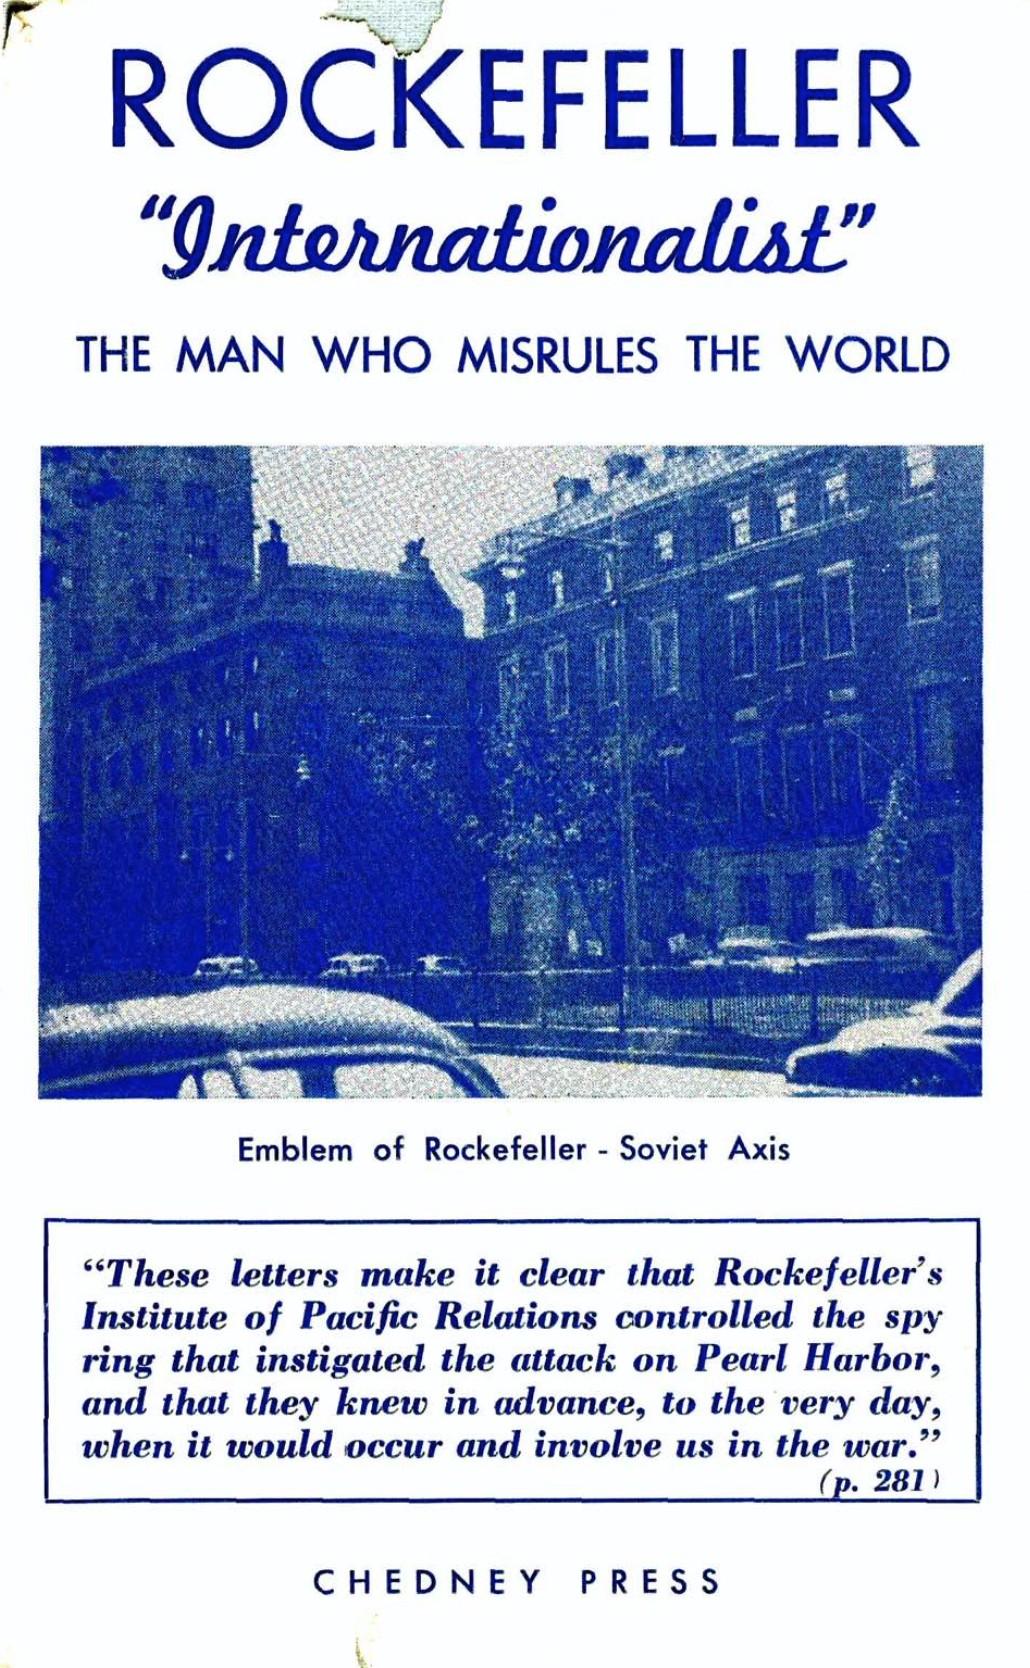 Rockefeller Internationalist the Man Who Misrules the World (1952) by Emanuel M. Josephson